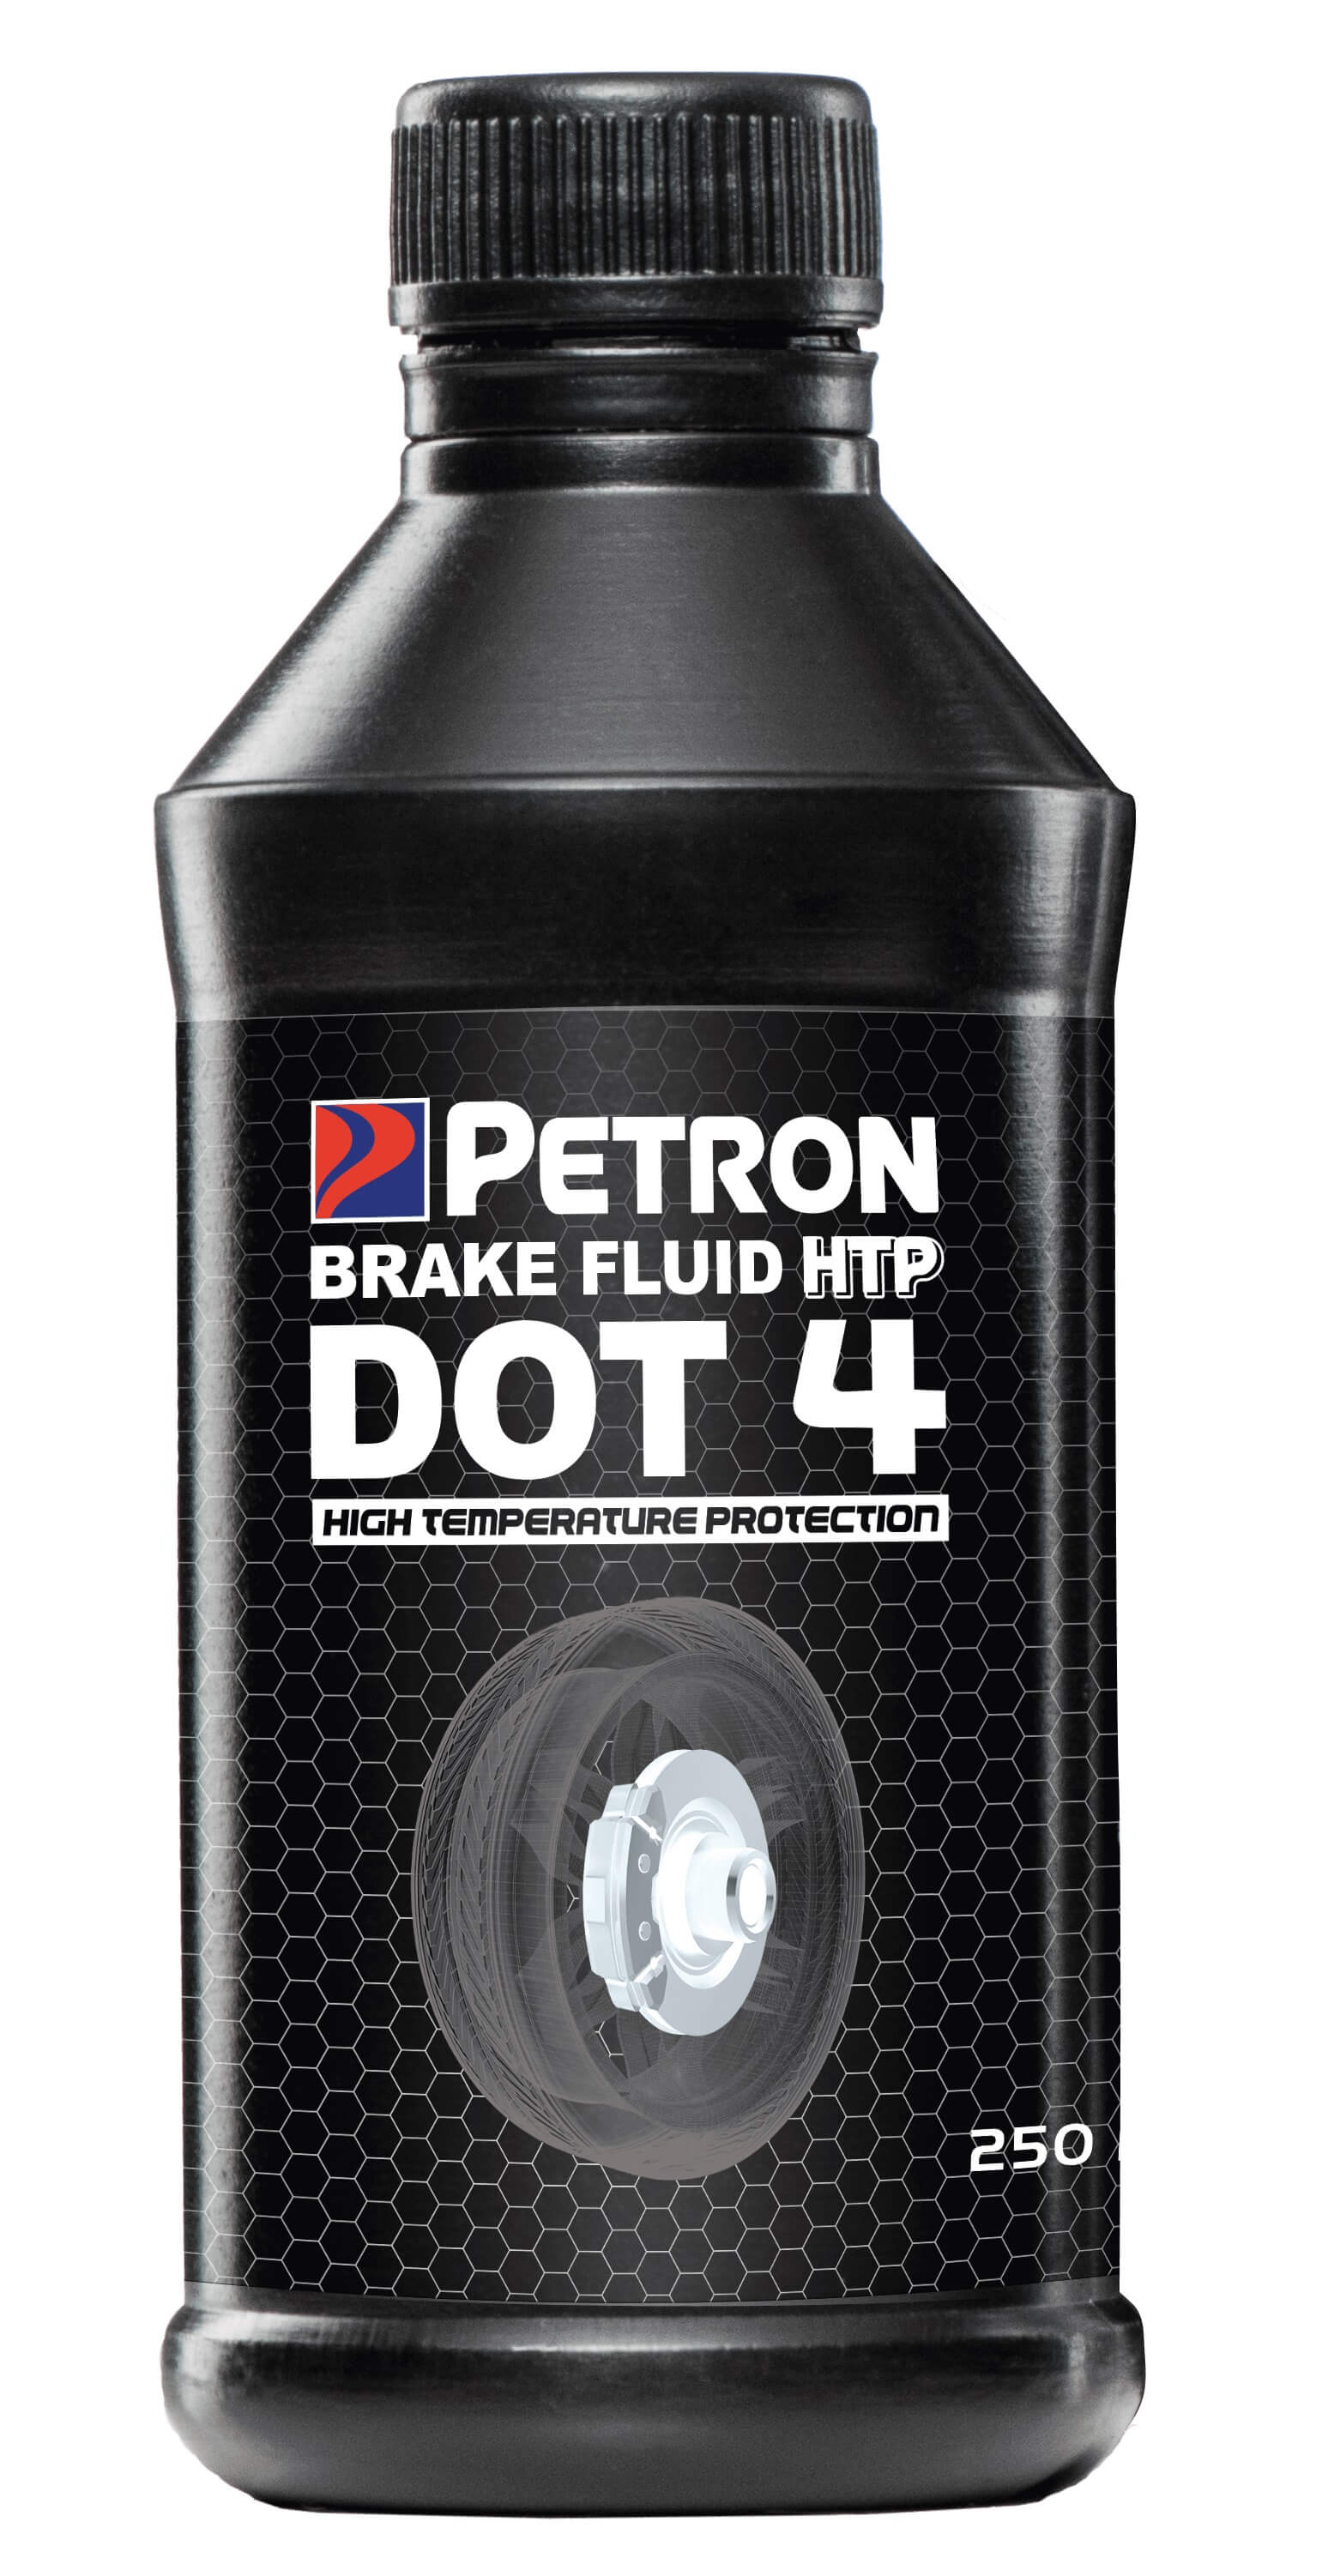 Petron Brake Fluid HTP